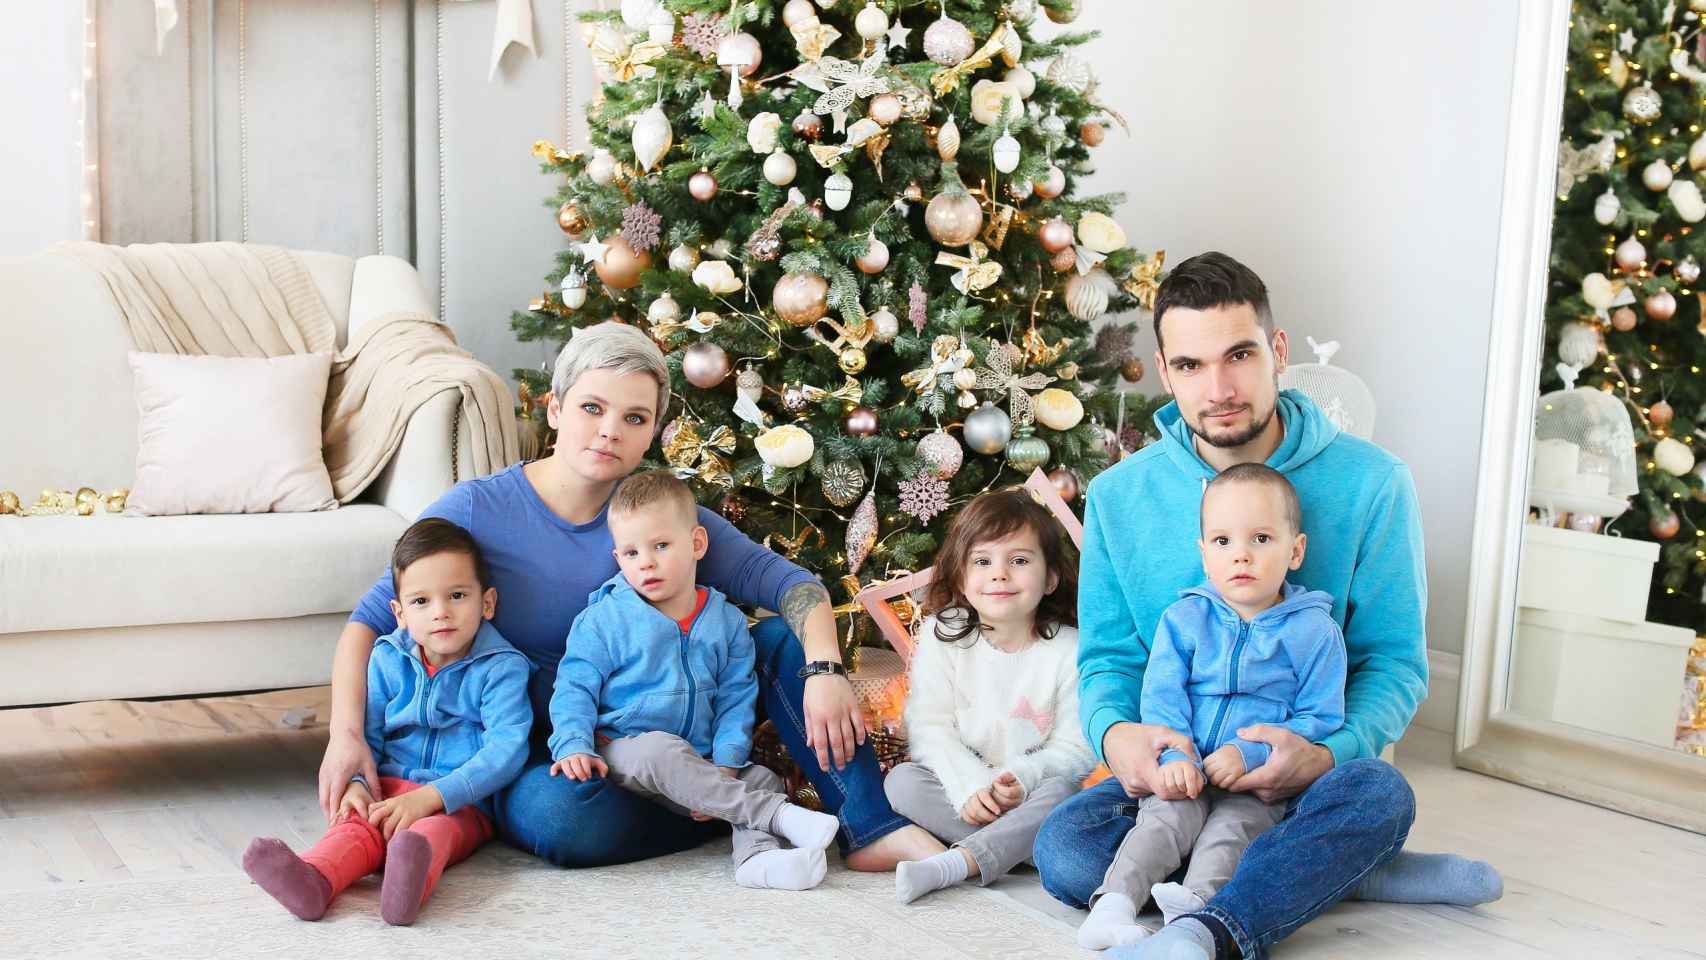 Yulia Savinovskikh y su familia. Foto: Vkontakte